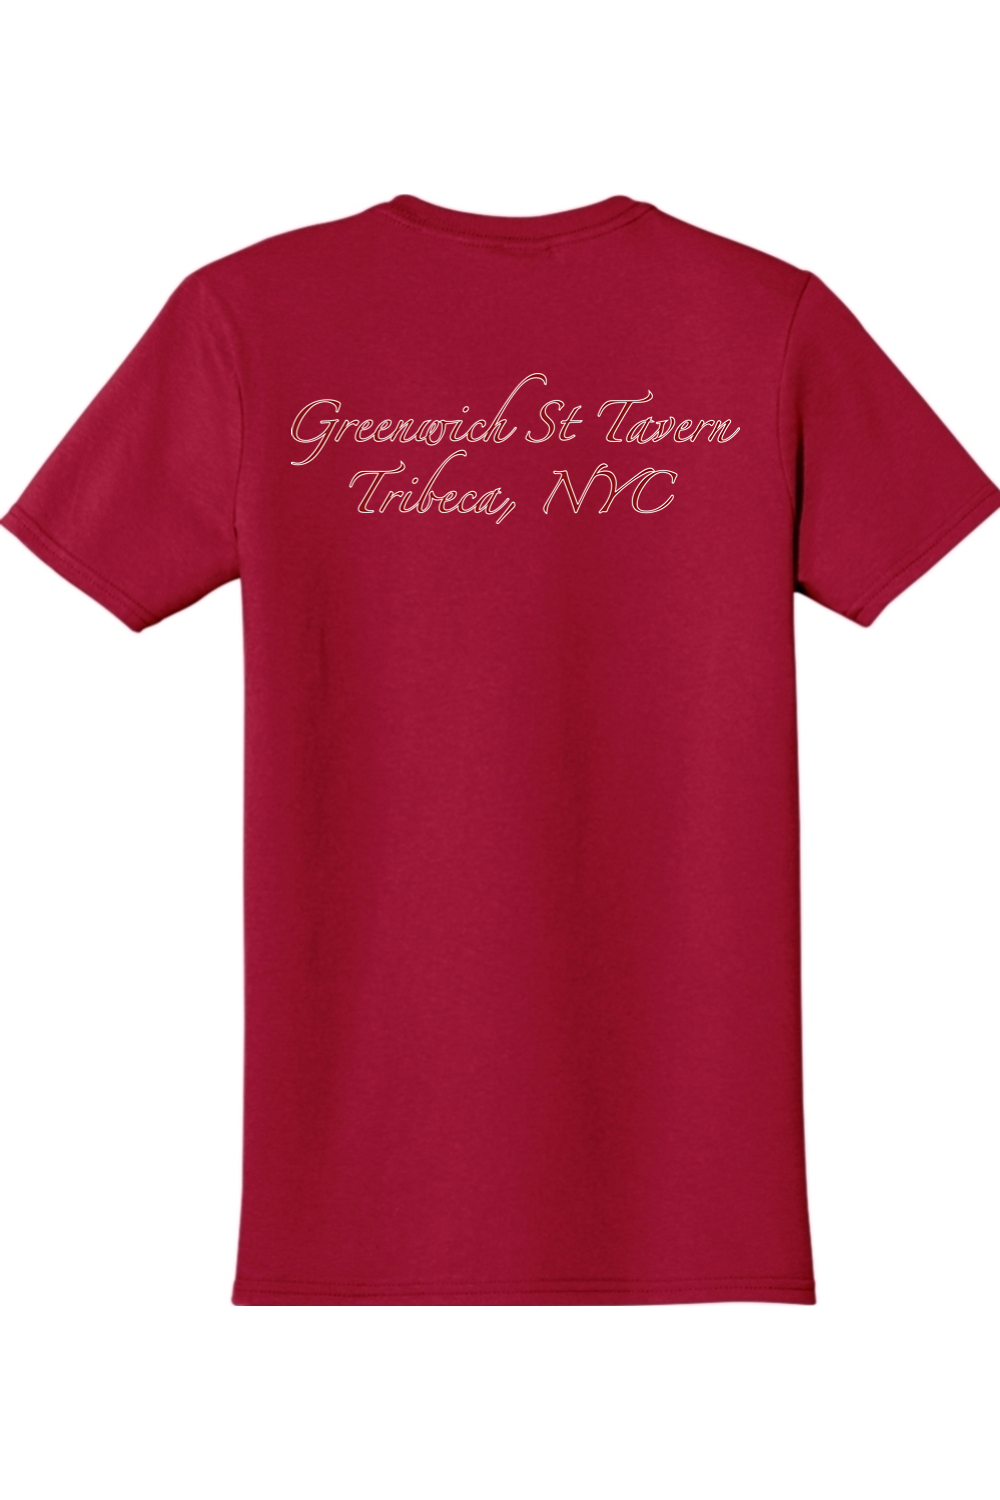 GST Crest Tribeca NYC T-Shirt